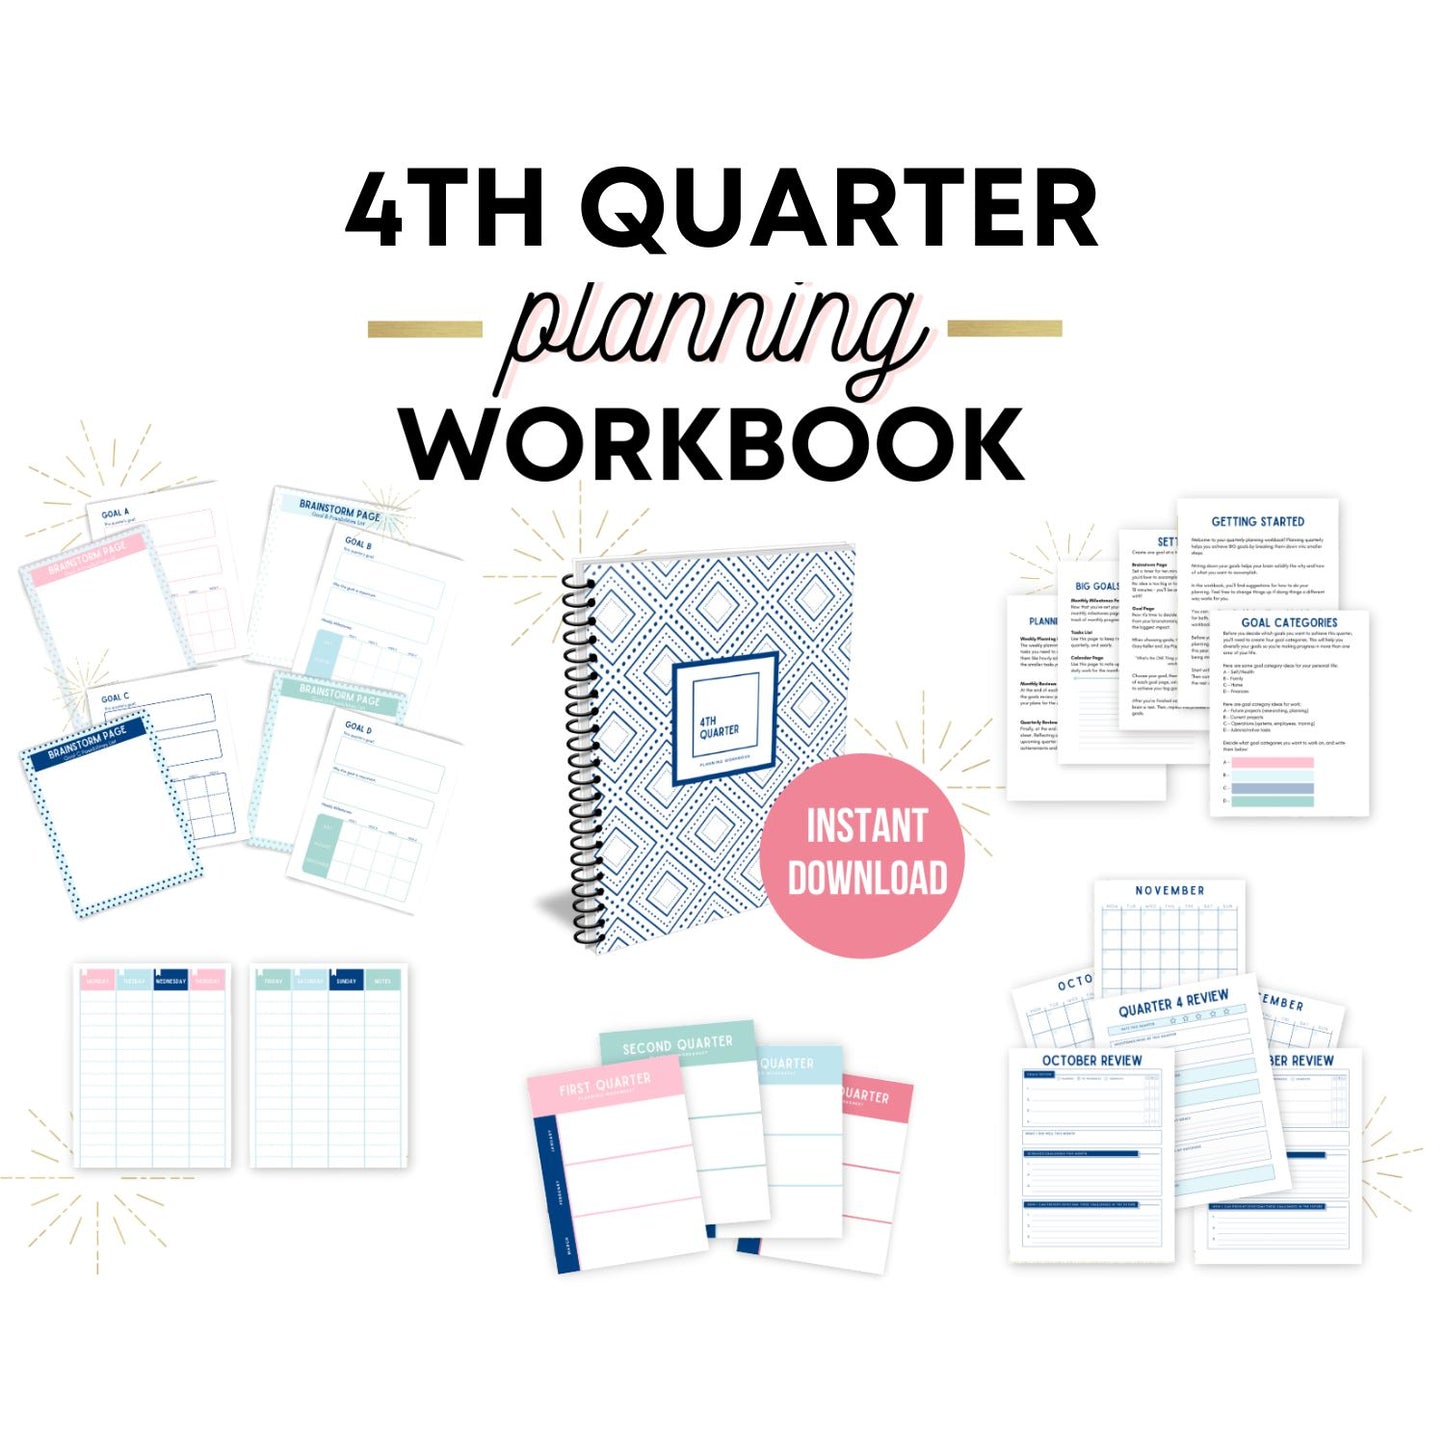 4th Quarter Quarterly Planning Workbook mockup